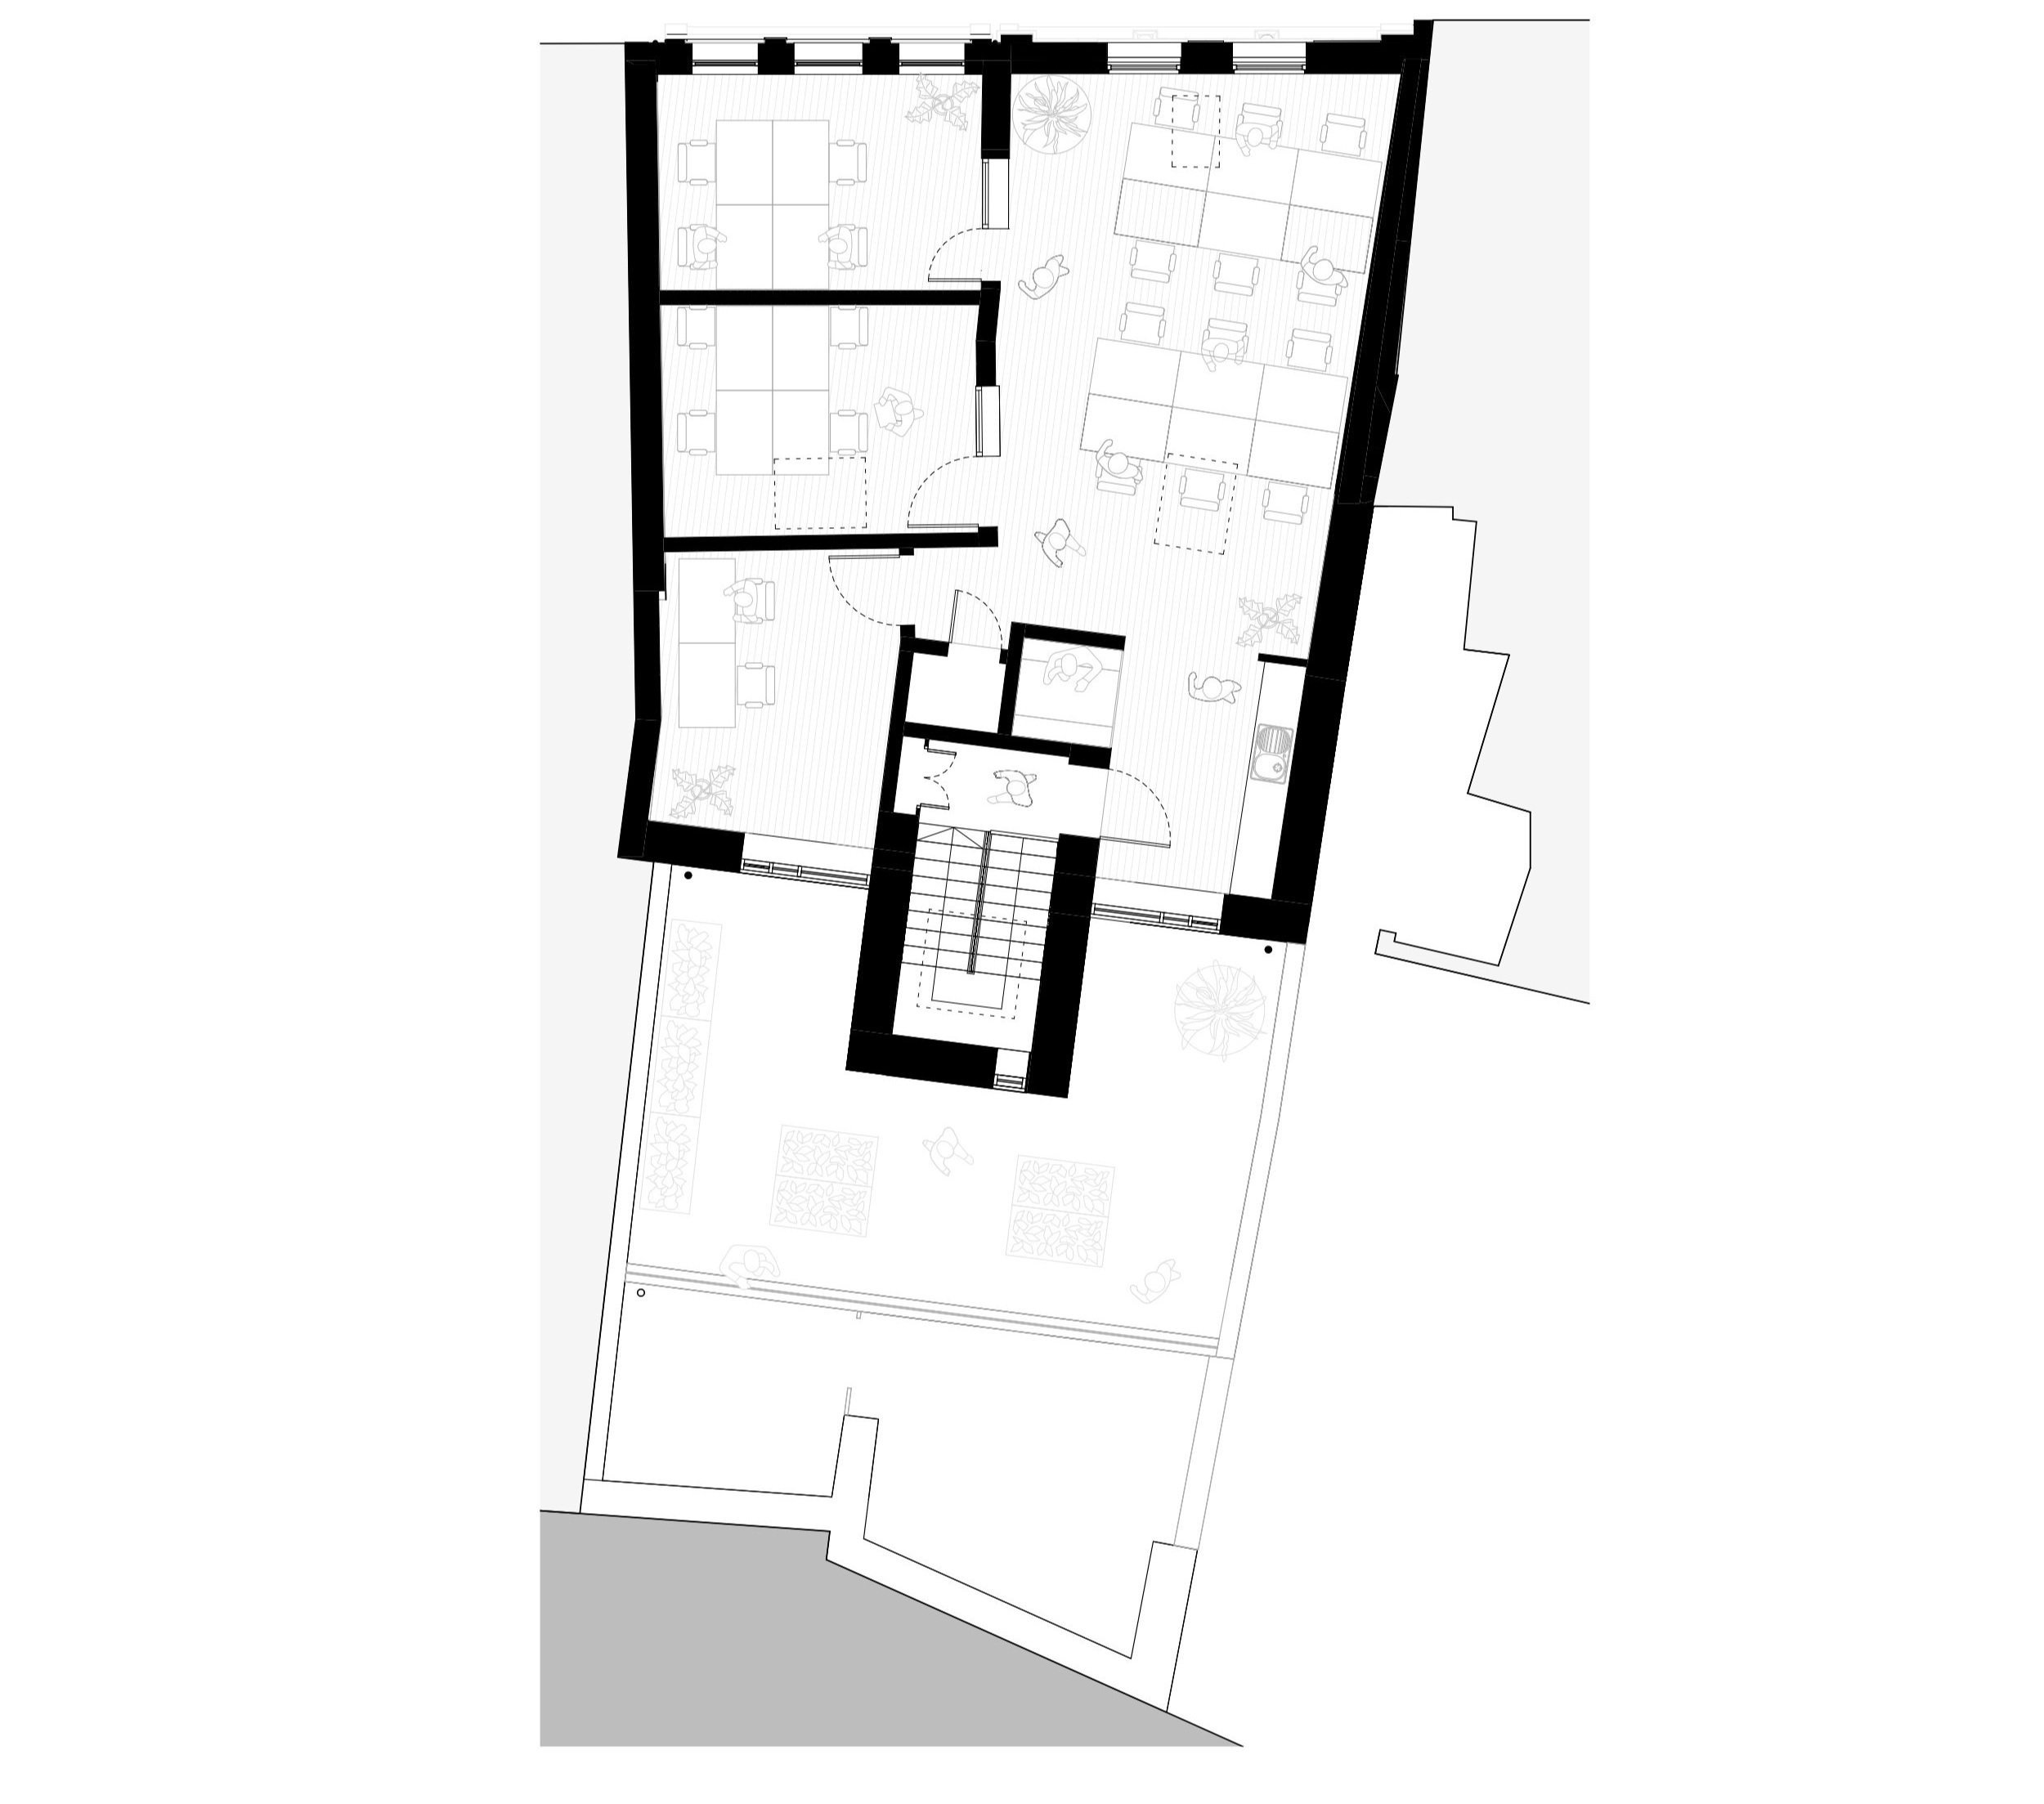 Proposed second floor